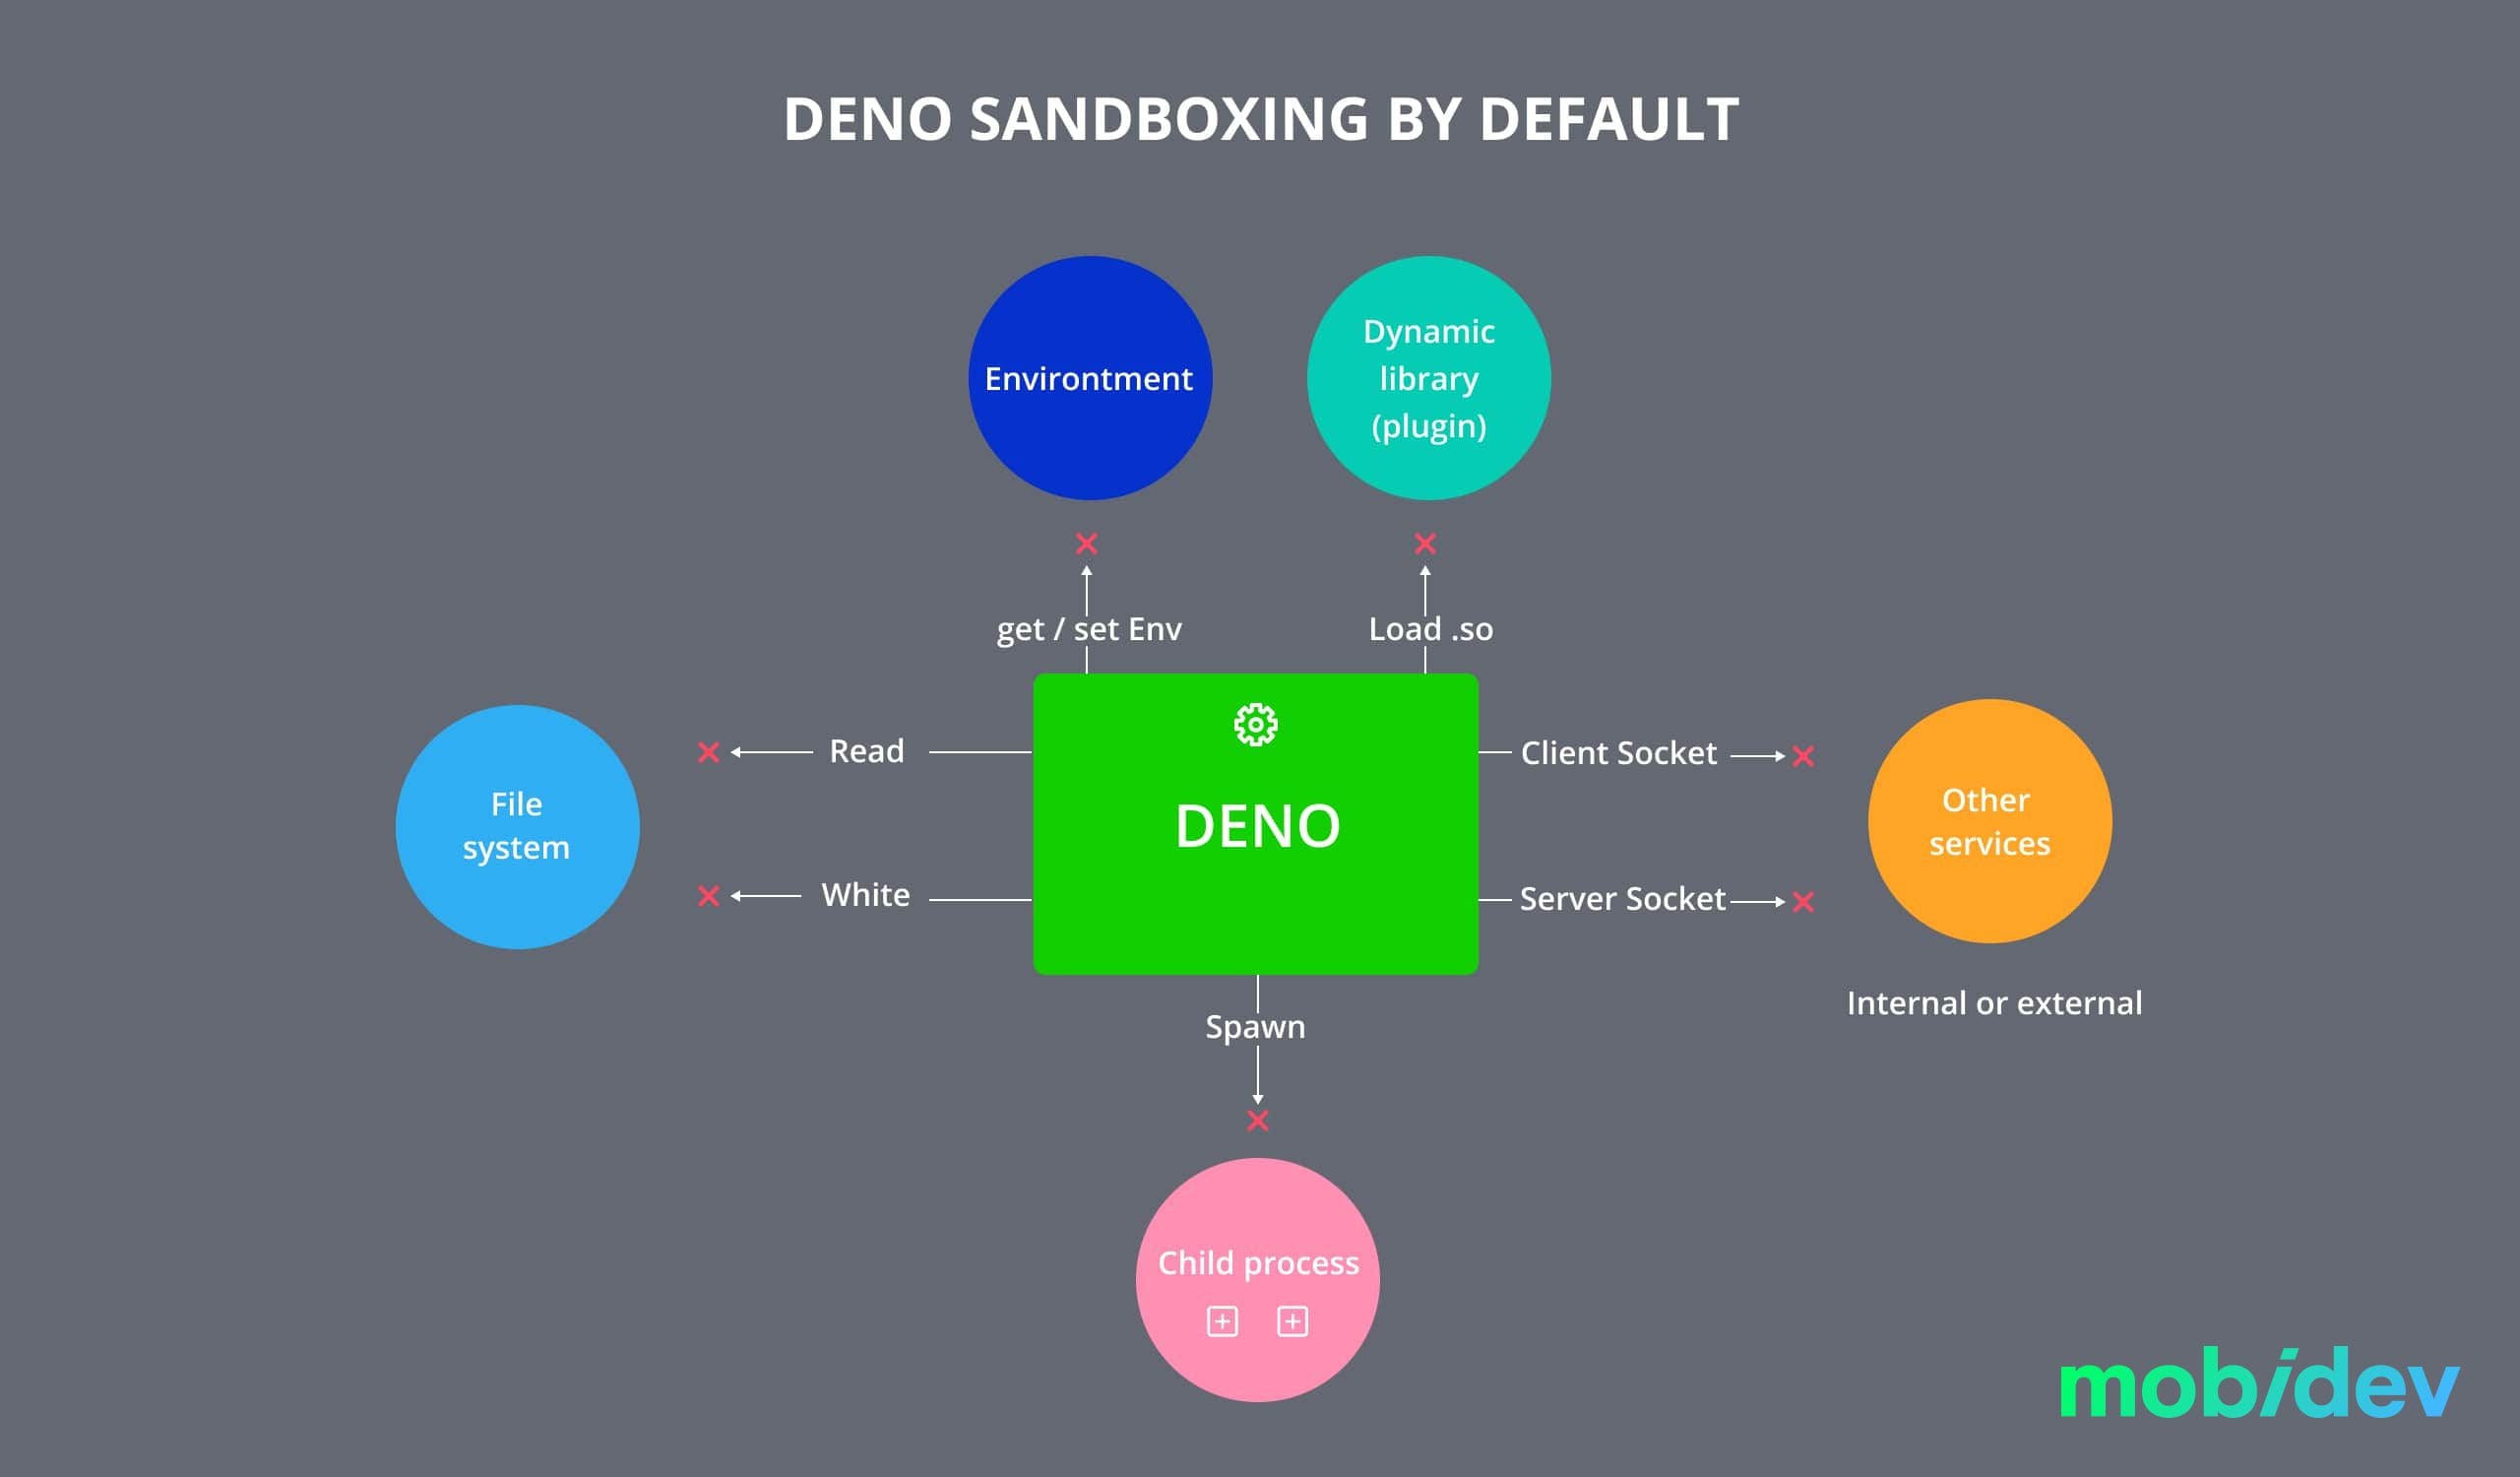 Sandboxing by default in Deno